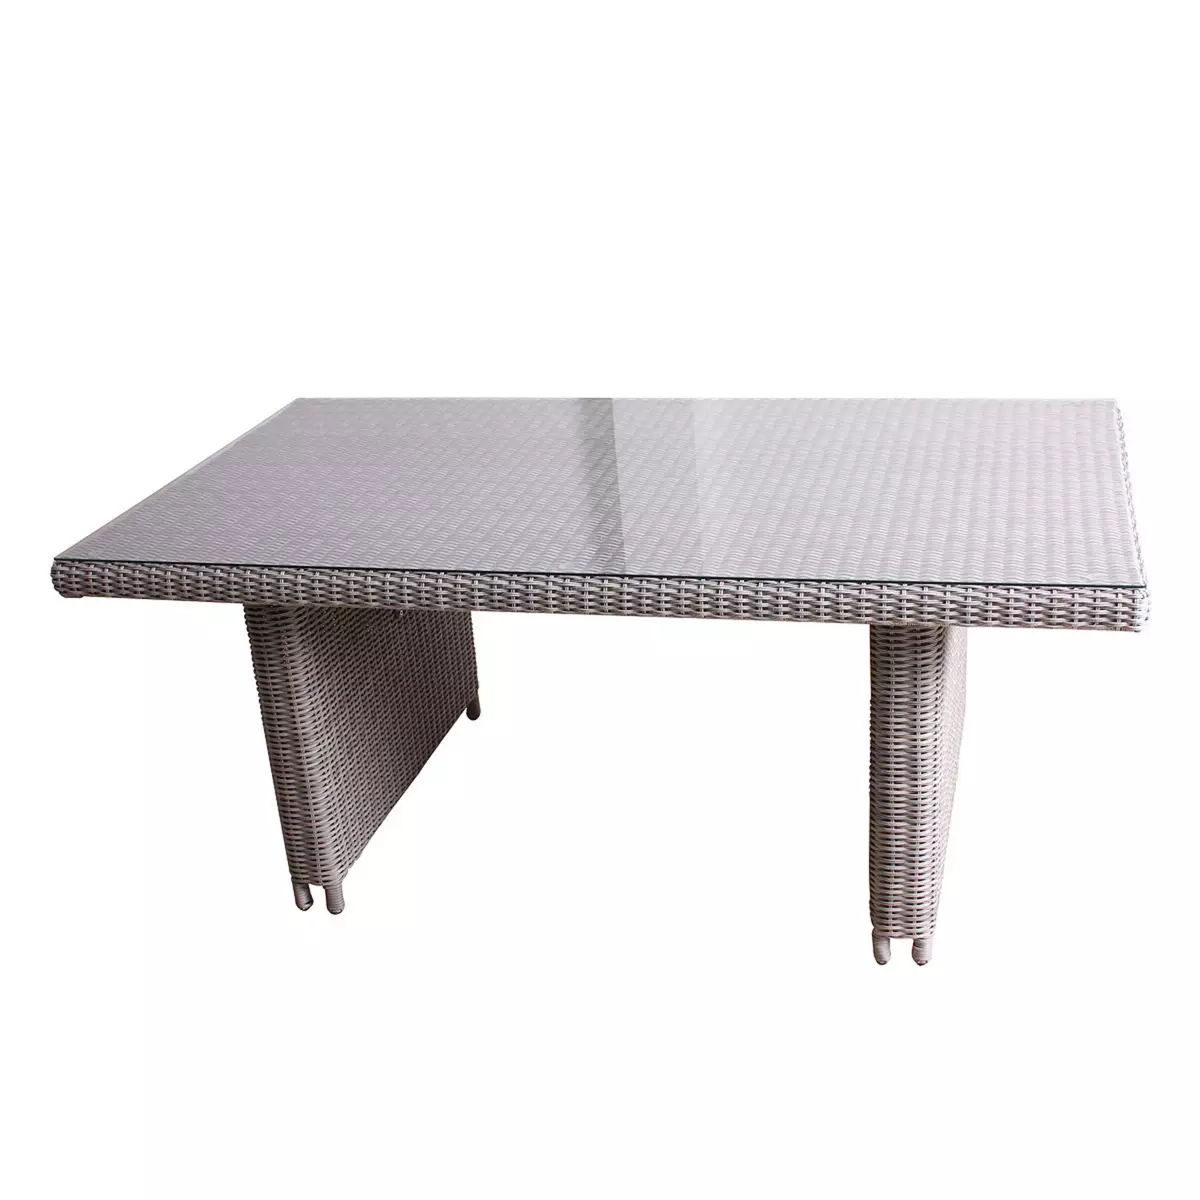 Table KEY WEST 180x100cm